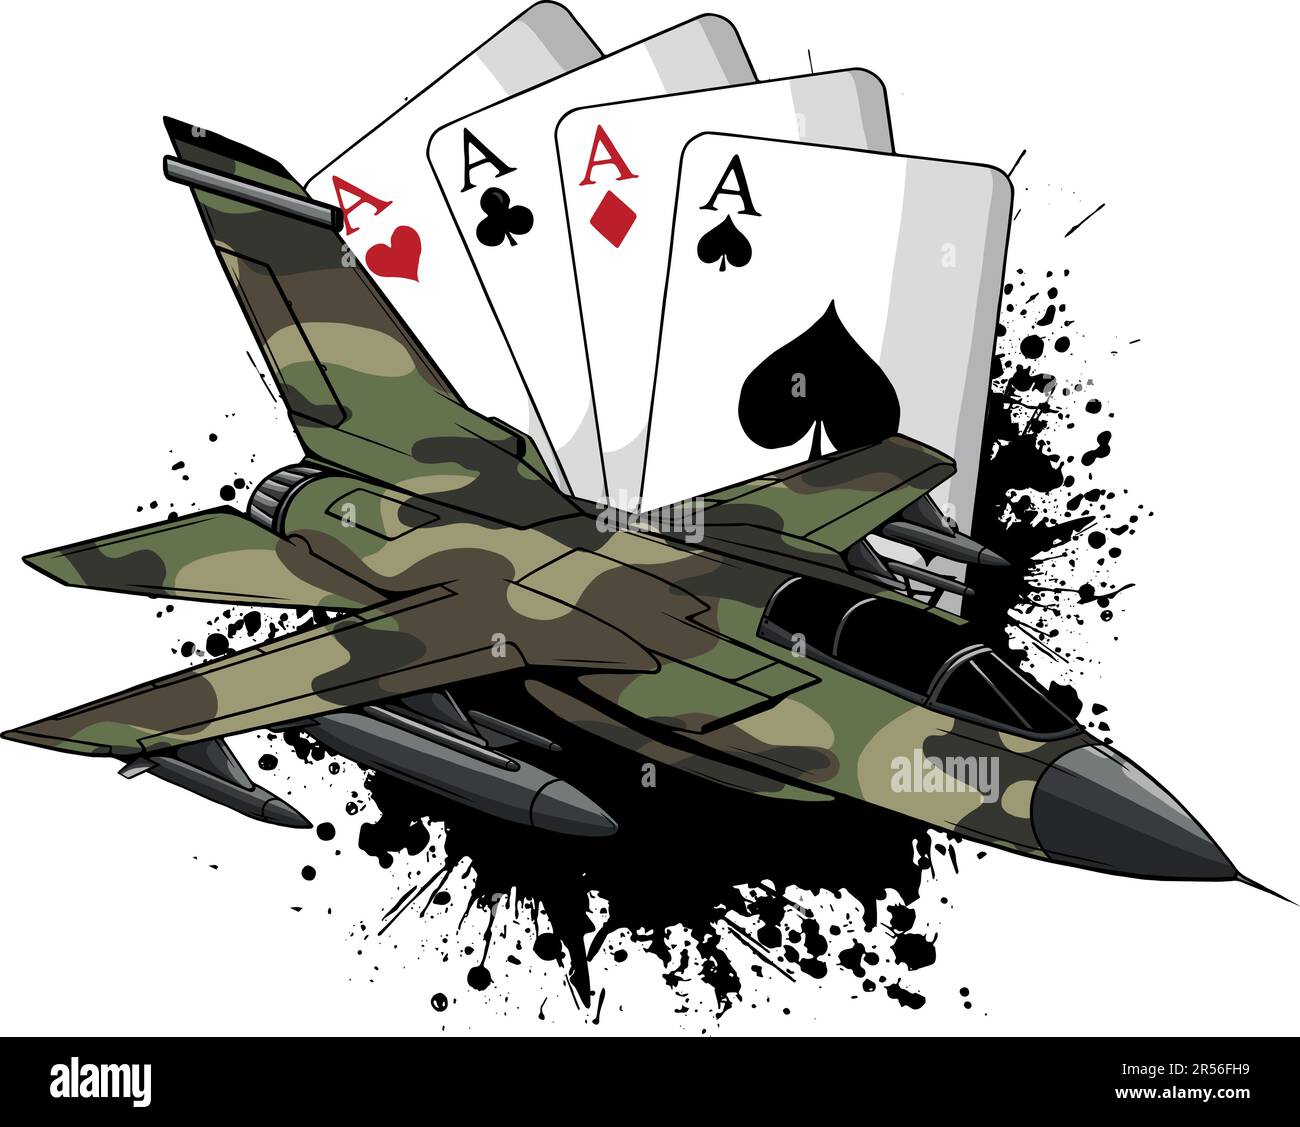 Swedish modern fighter jet icon vector illustration Stock Vector